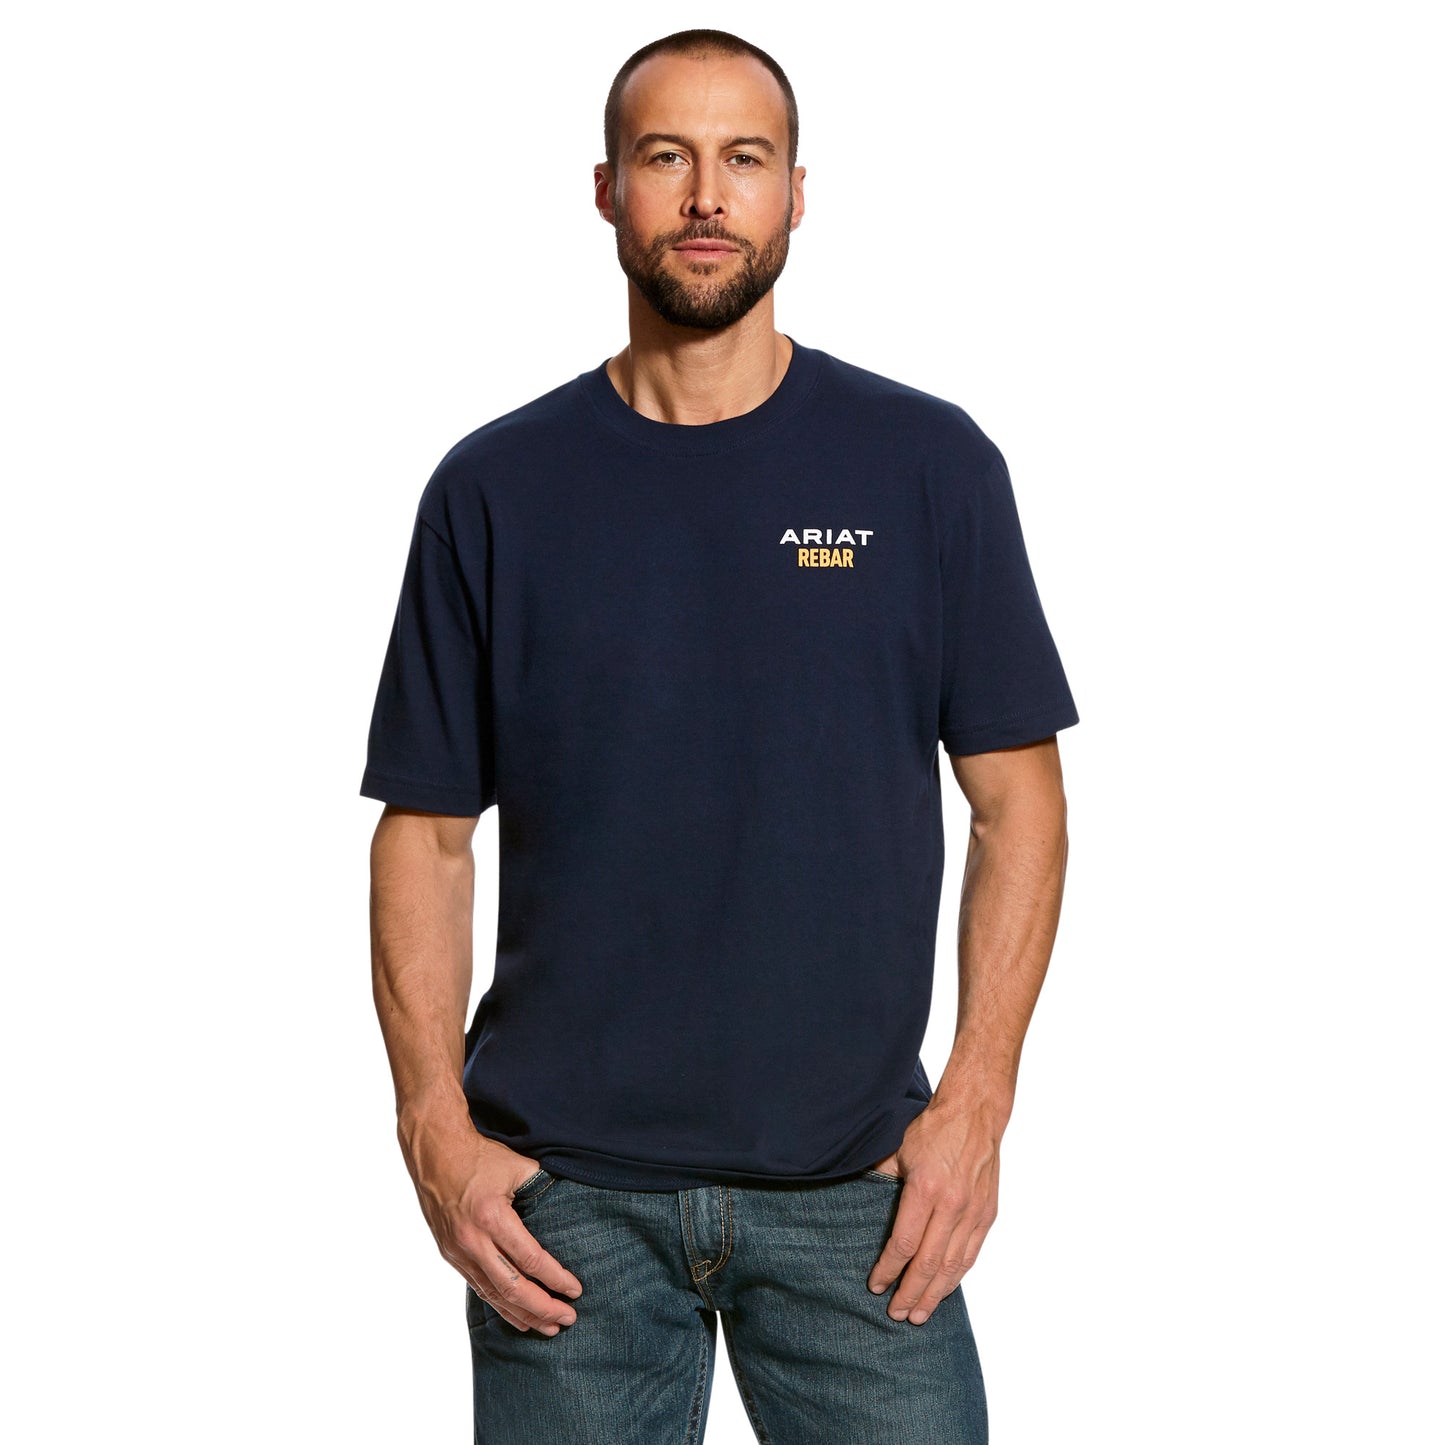 Ariat Rebar Cotton Strong Logo Navy T-shirt 10025410